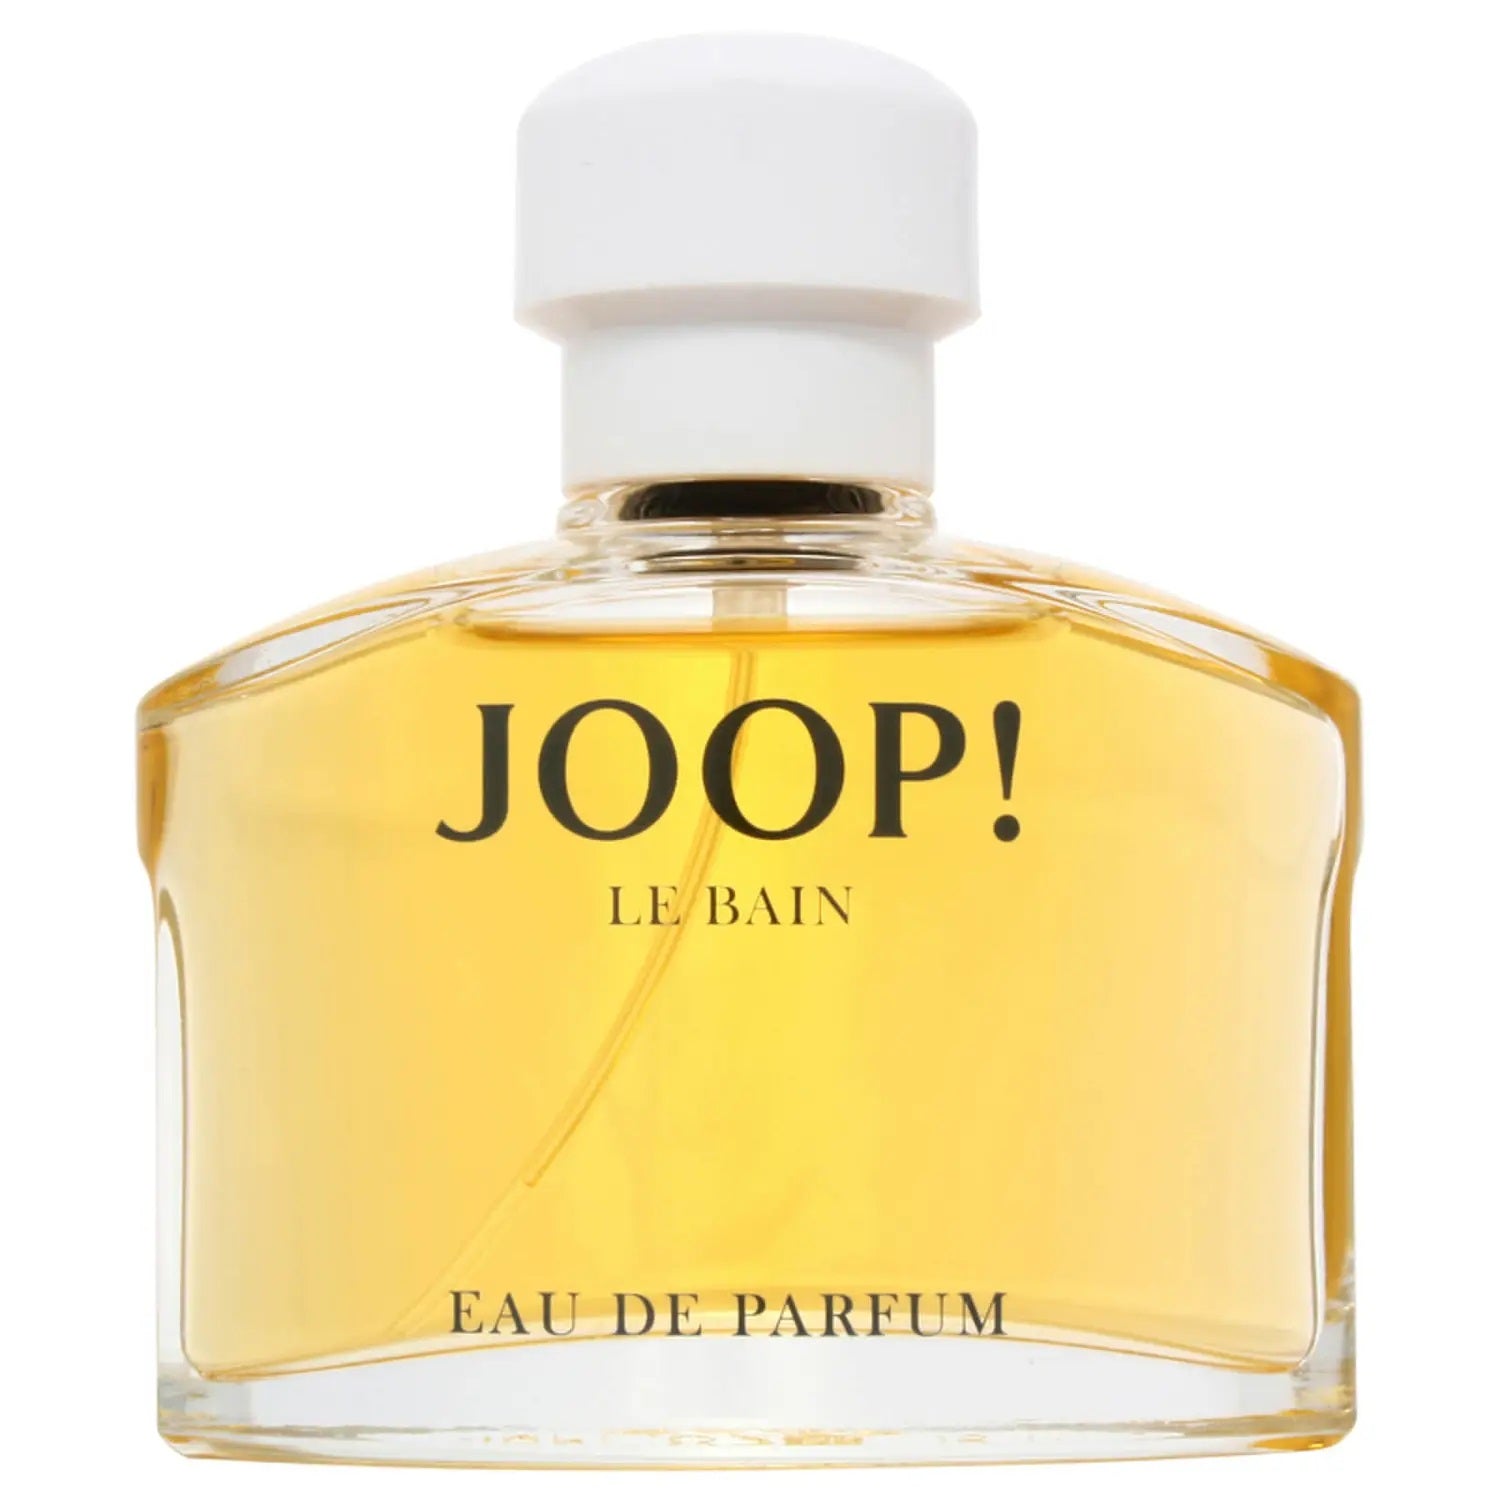 Joop! Le Bain Eau de Parfum 75ml Spray